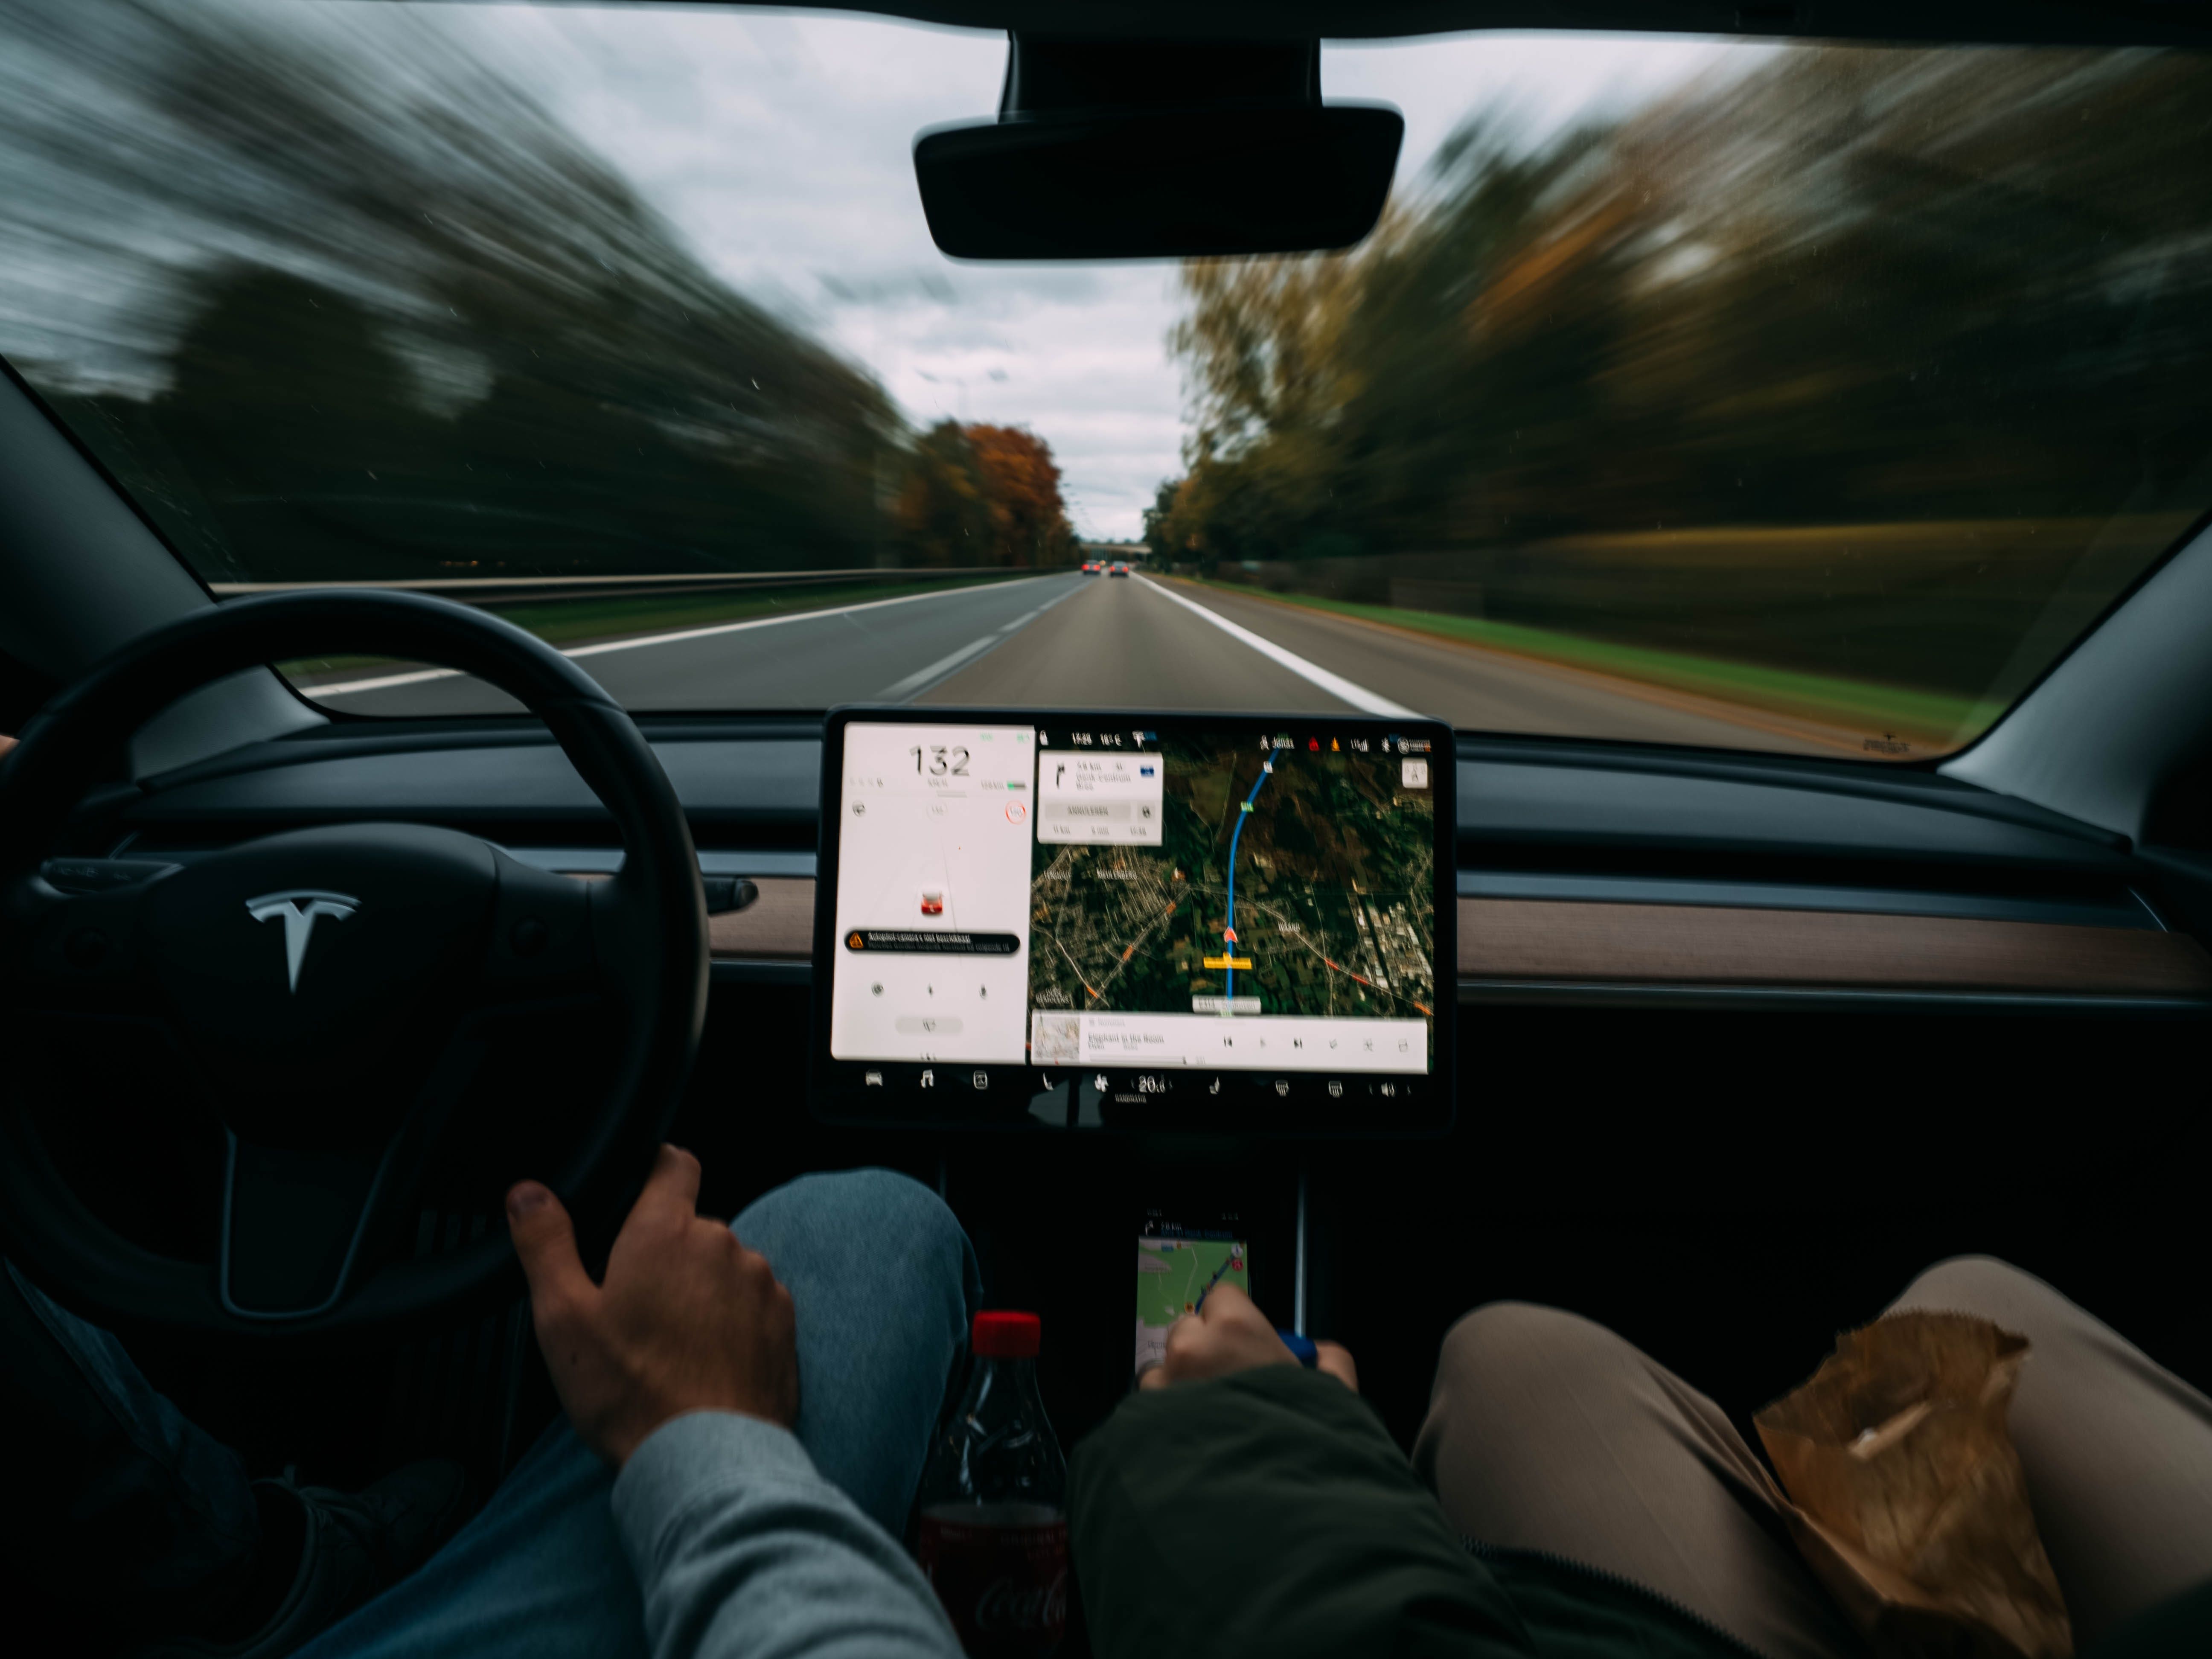 Tesla Tells Regulators Elon Musk's Tweet Doesn't 'Match Engineering Reality' On Self-Driving Tech